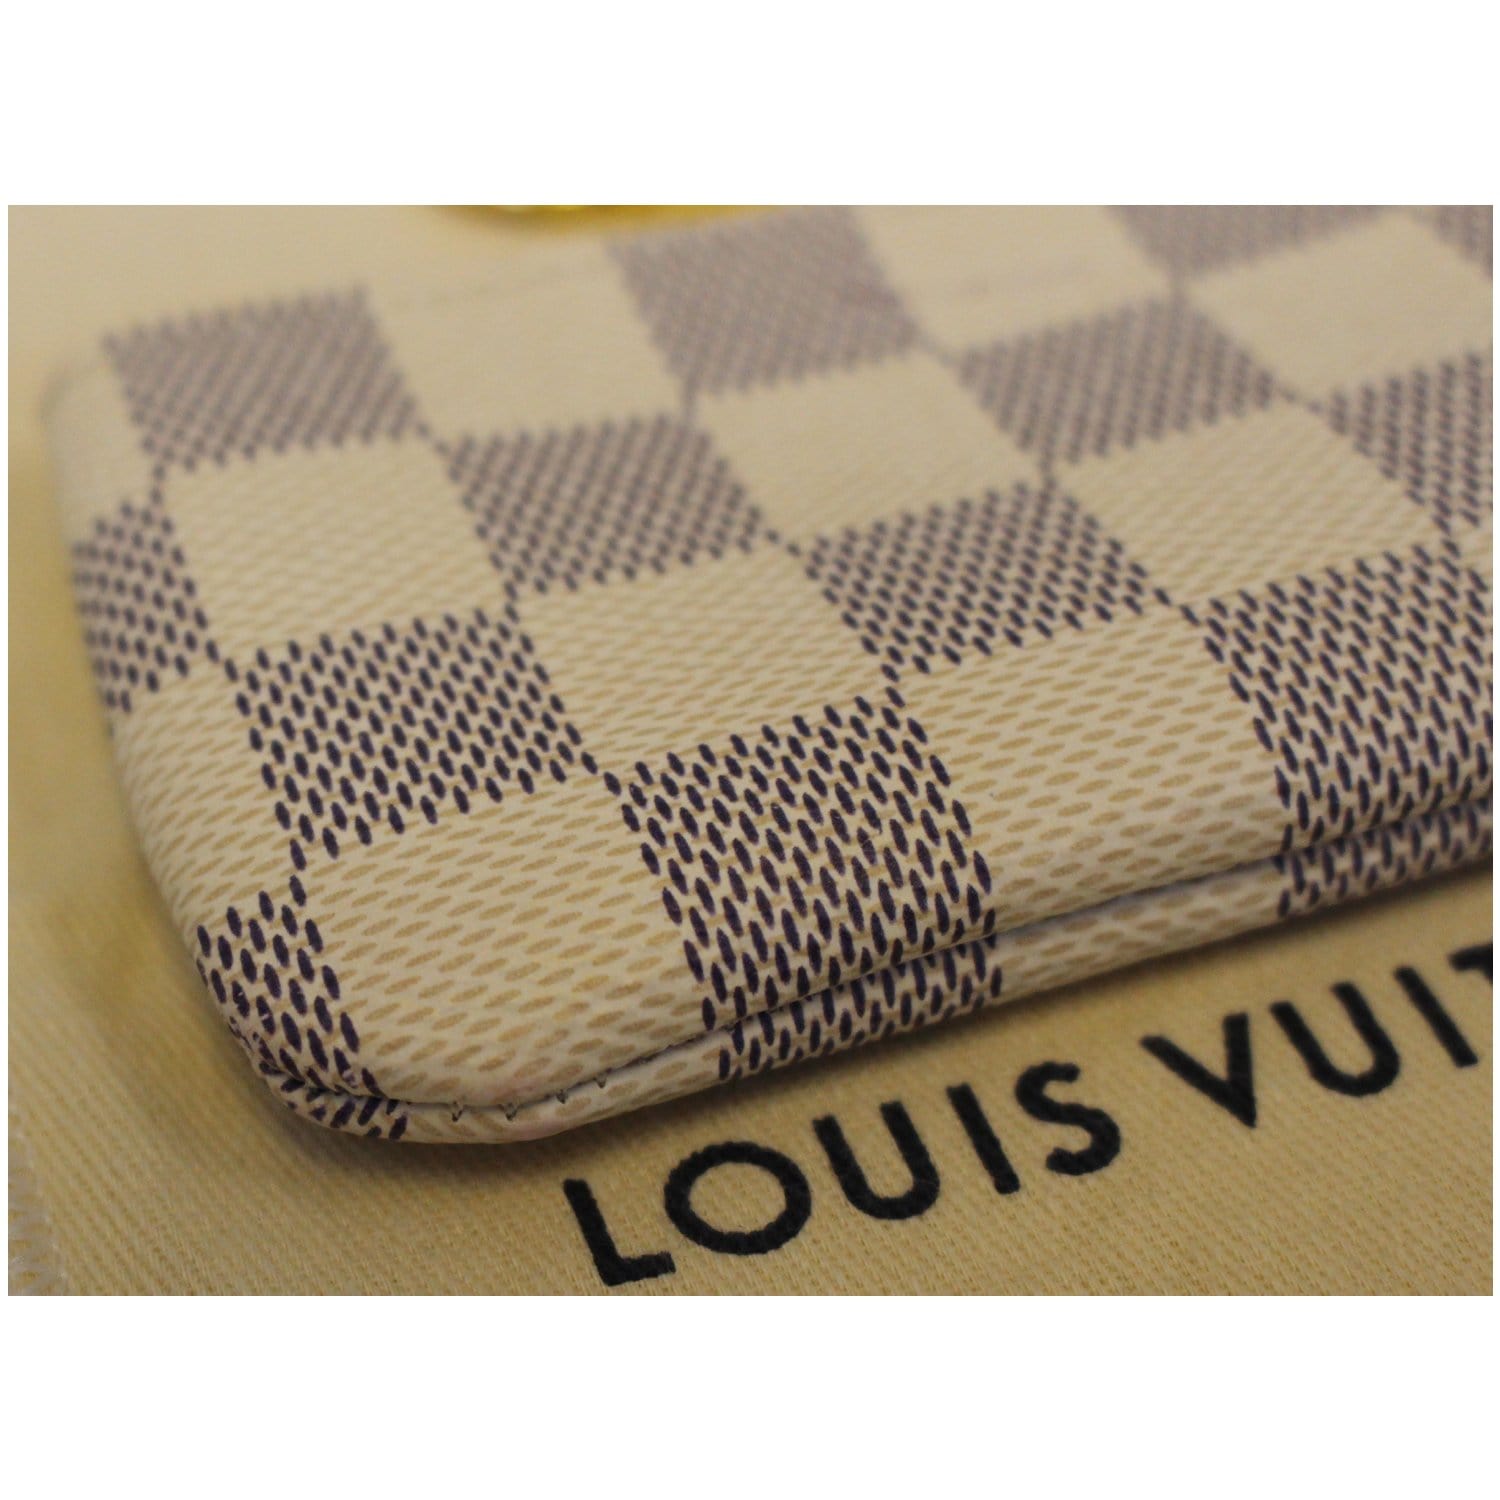 Louis Vuitton Damier Azur Key Pouch in Box – QUEEN MAY